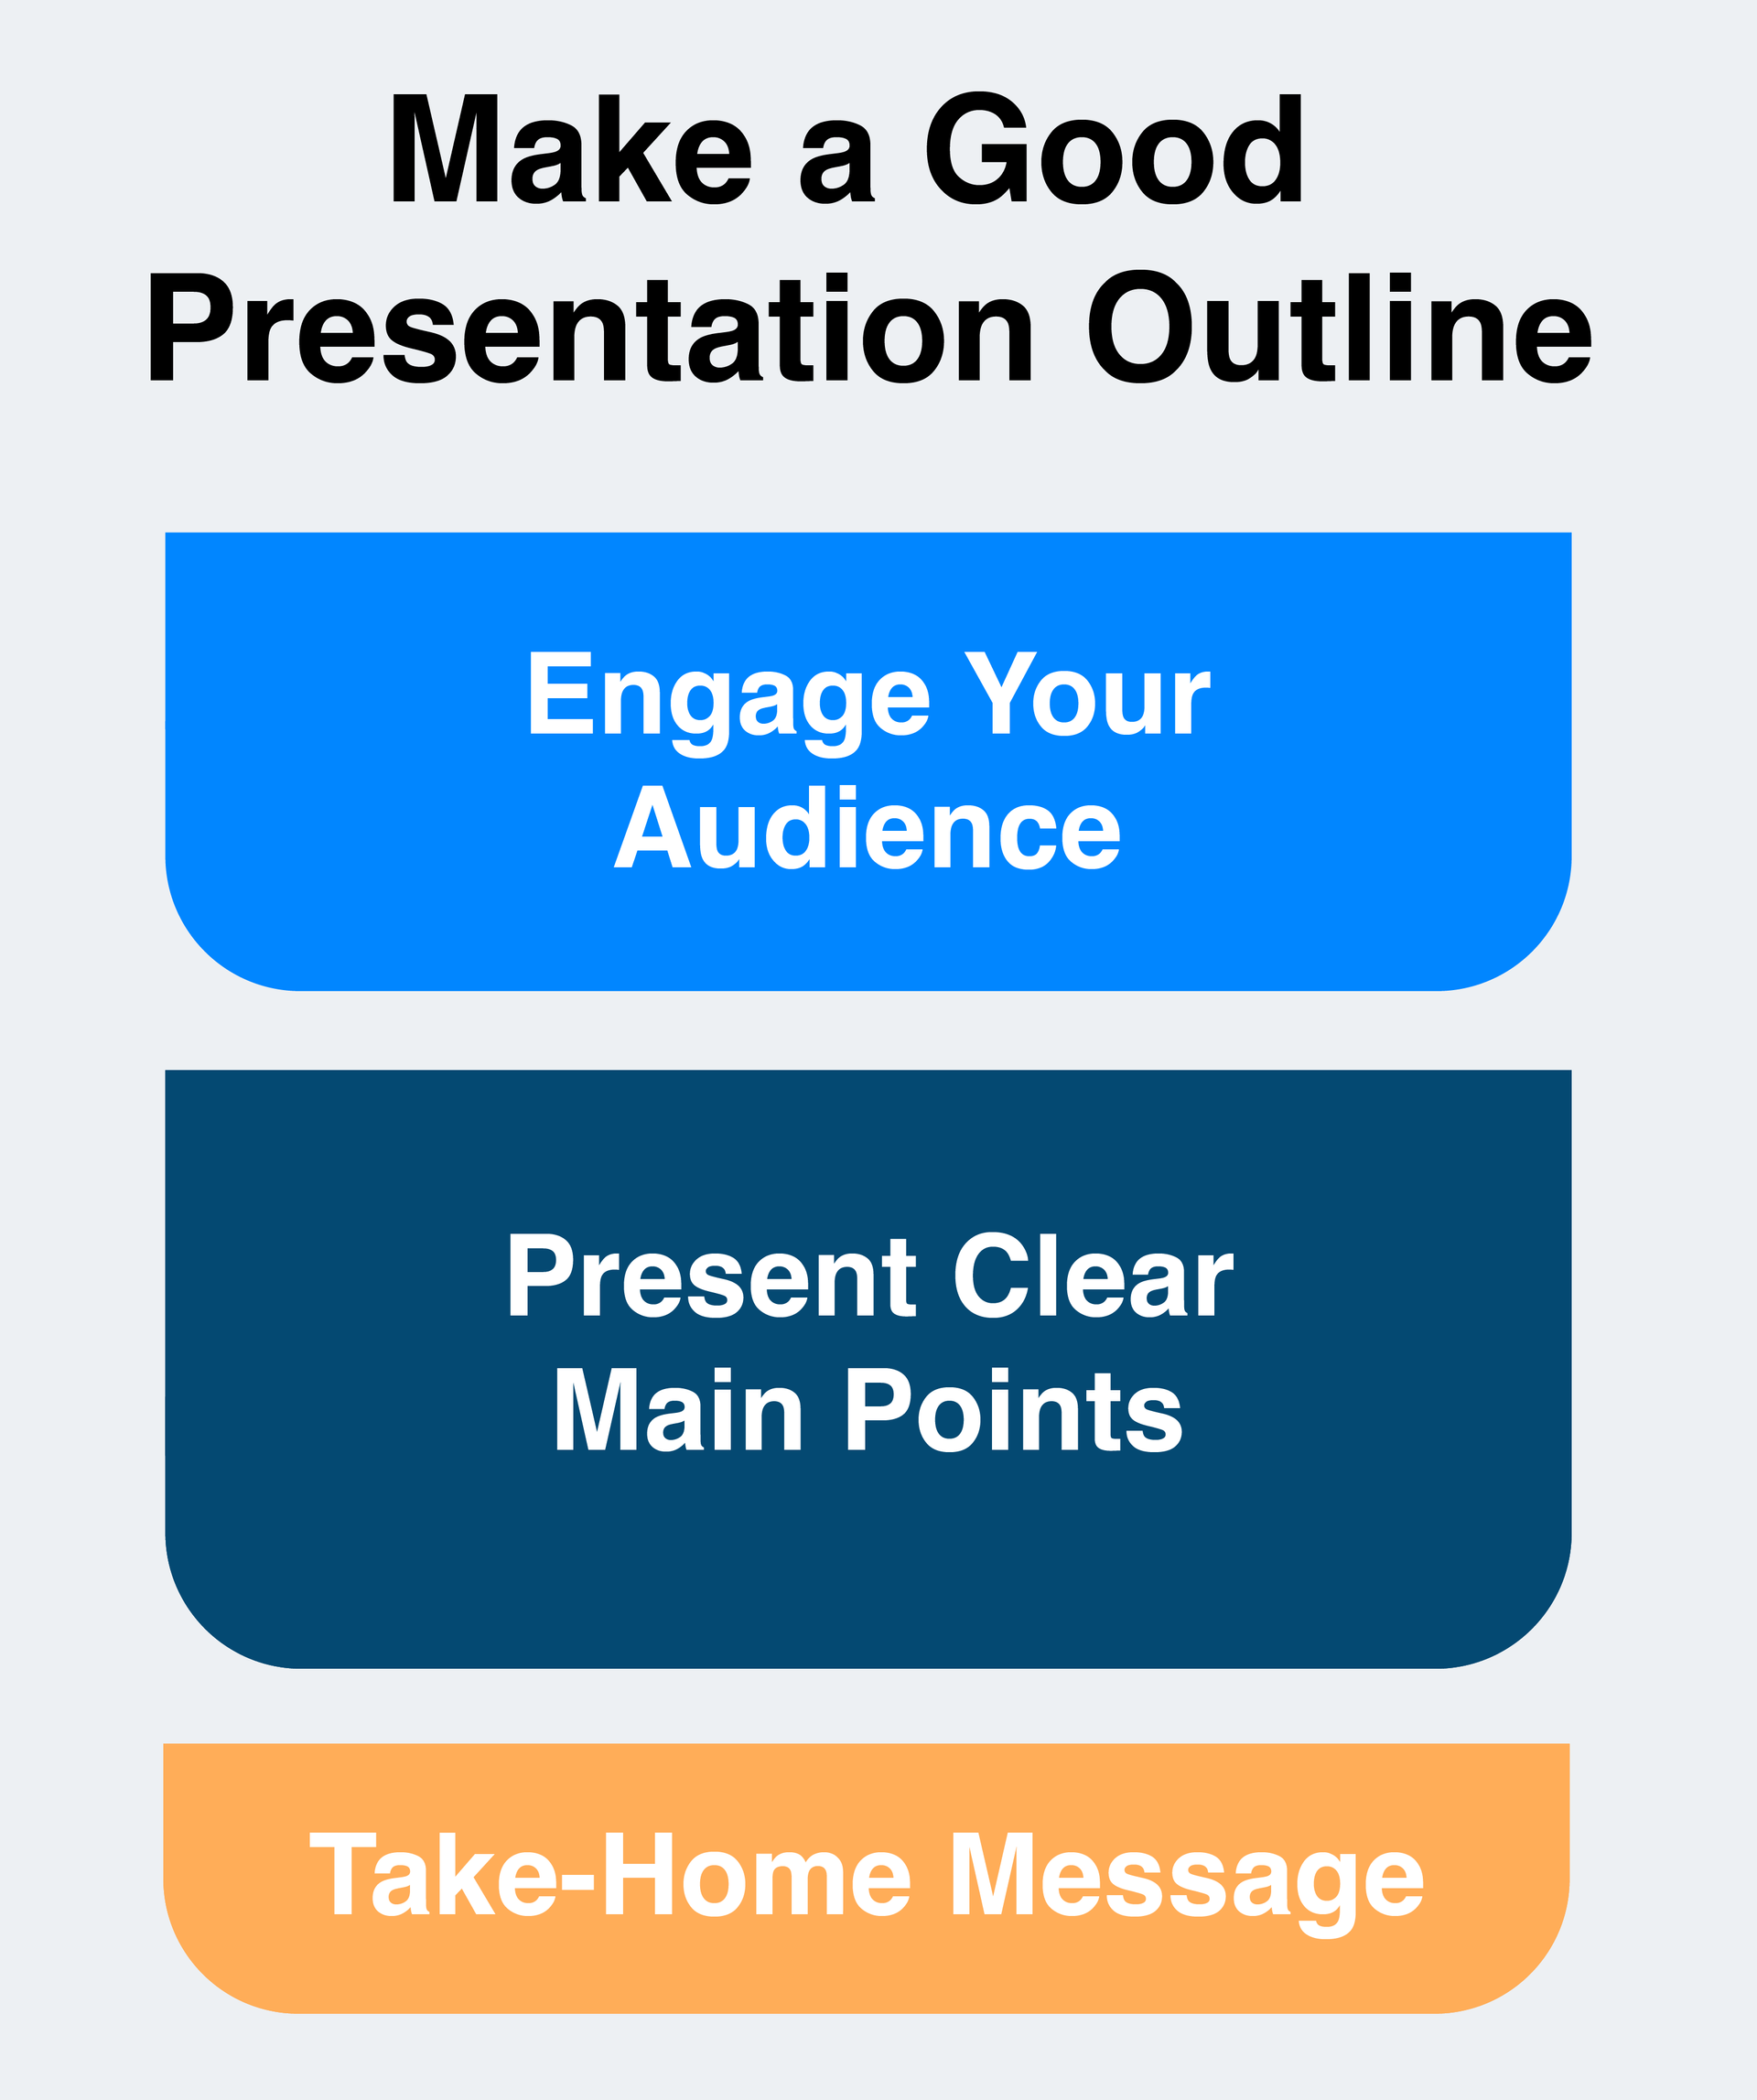 Summary of scientific presentation outline tips  